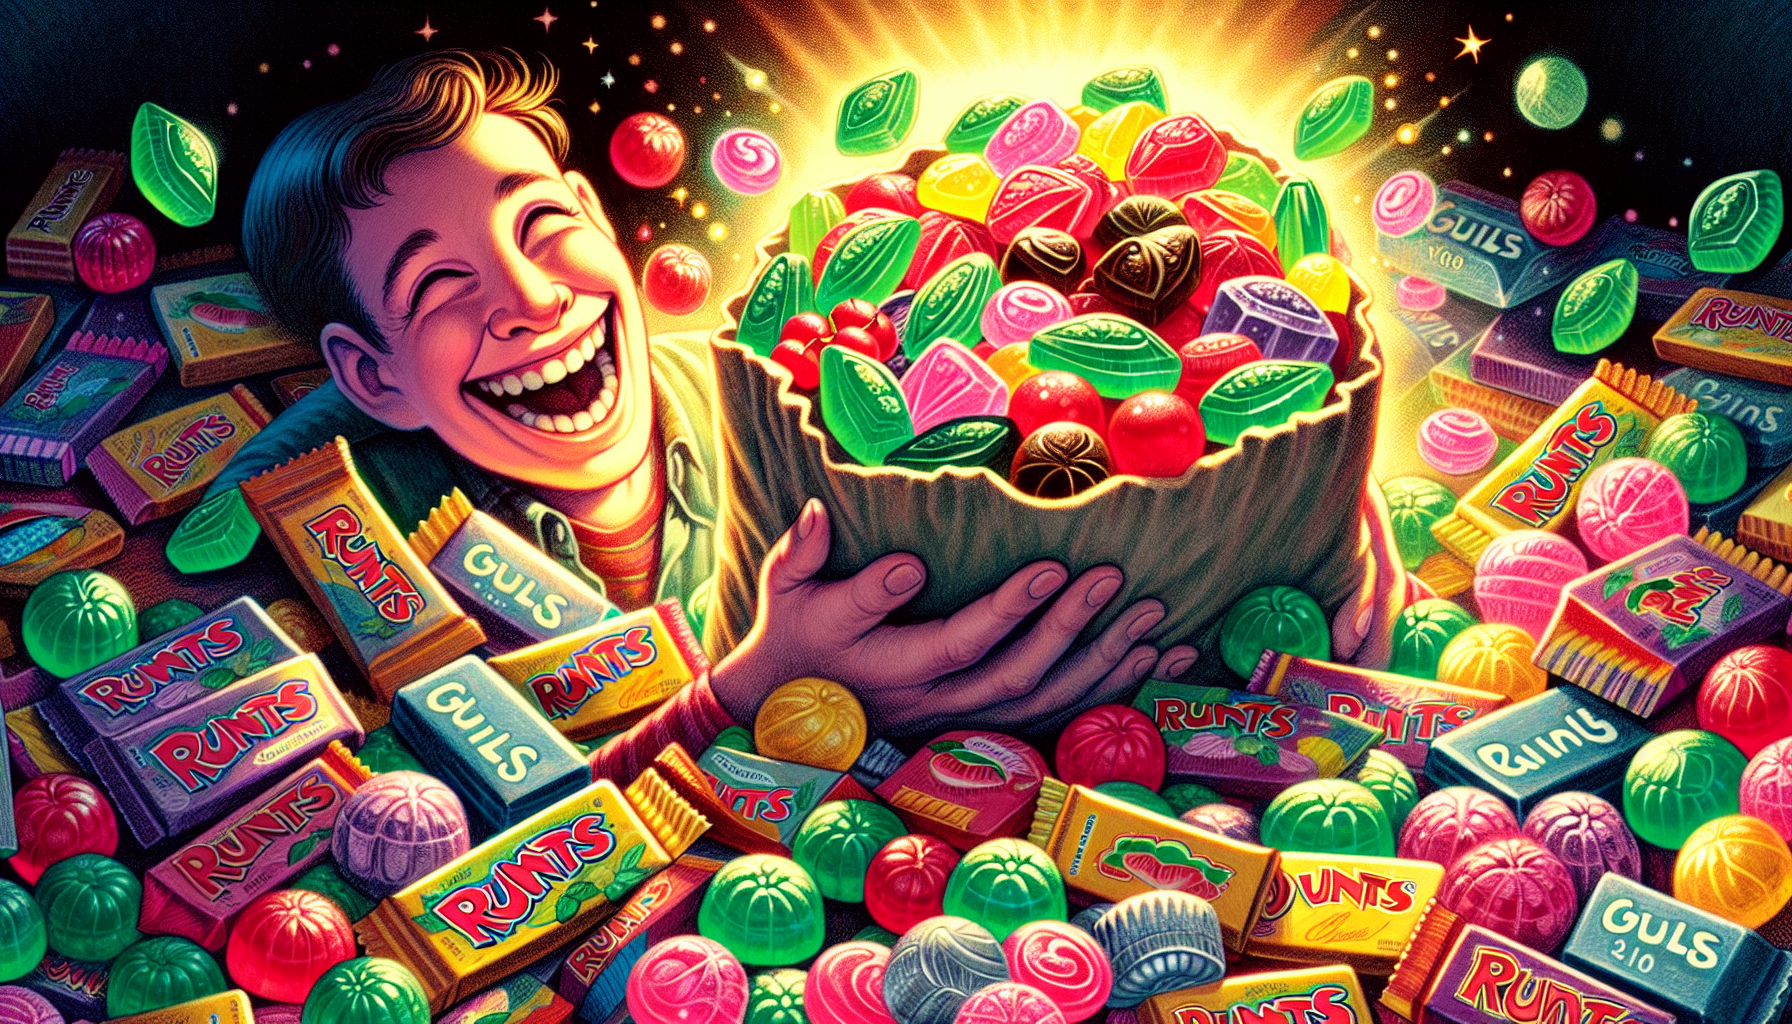 Joyful bulk purchase of Runts candy